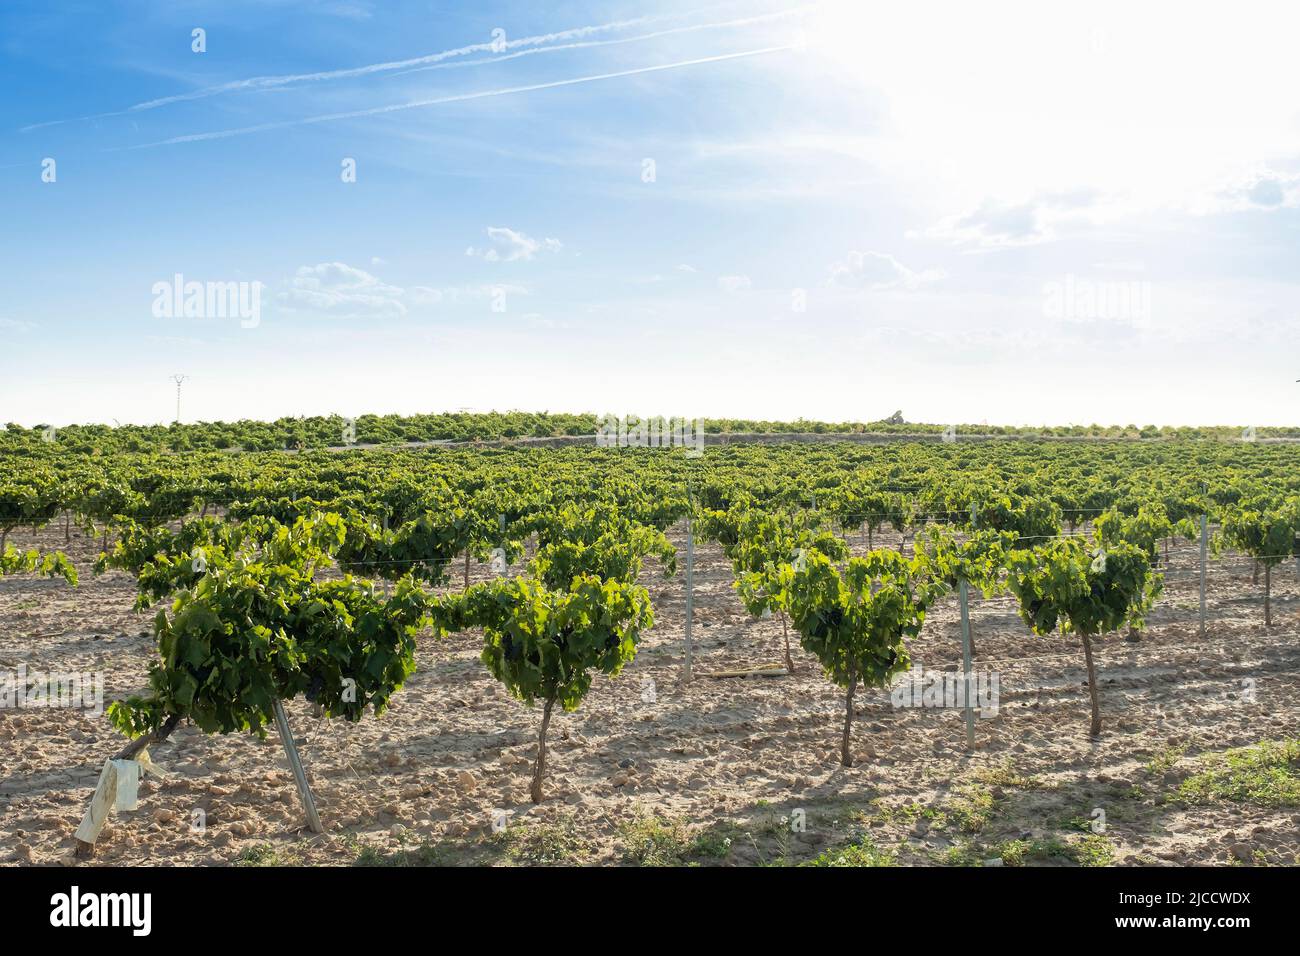 Wine-making vineyard fields with ripe white grapes in harvest season Stock Photo